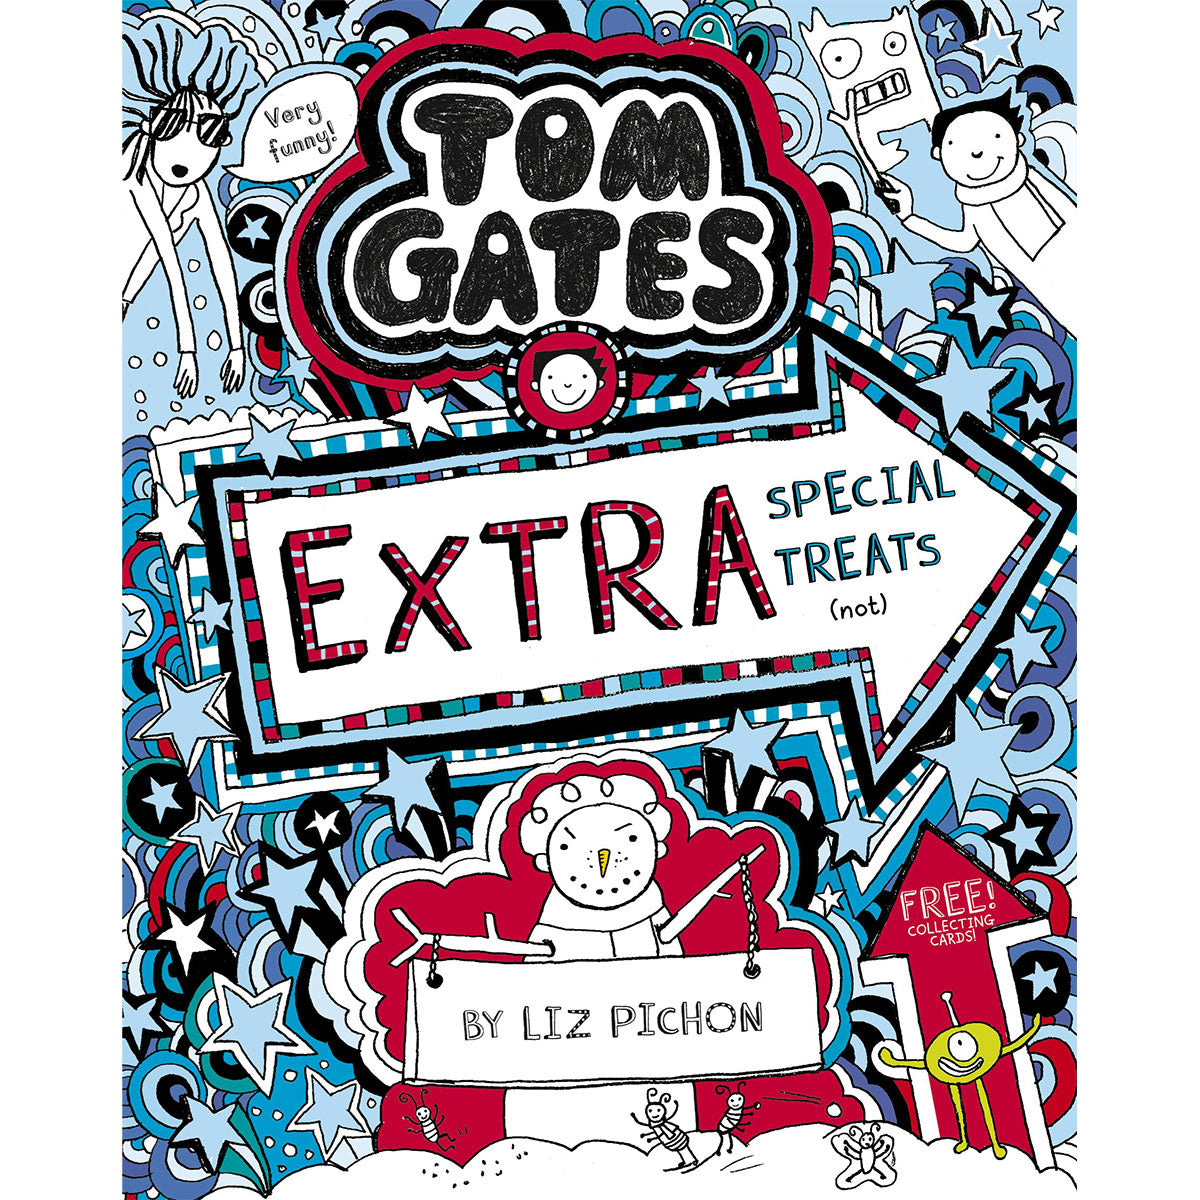 Tom Gates Book 6: Extra Special Treats (not). (PB)